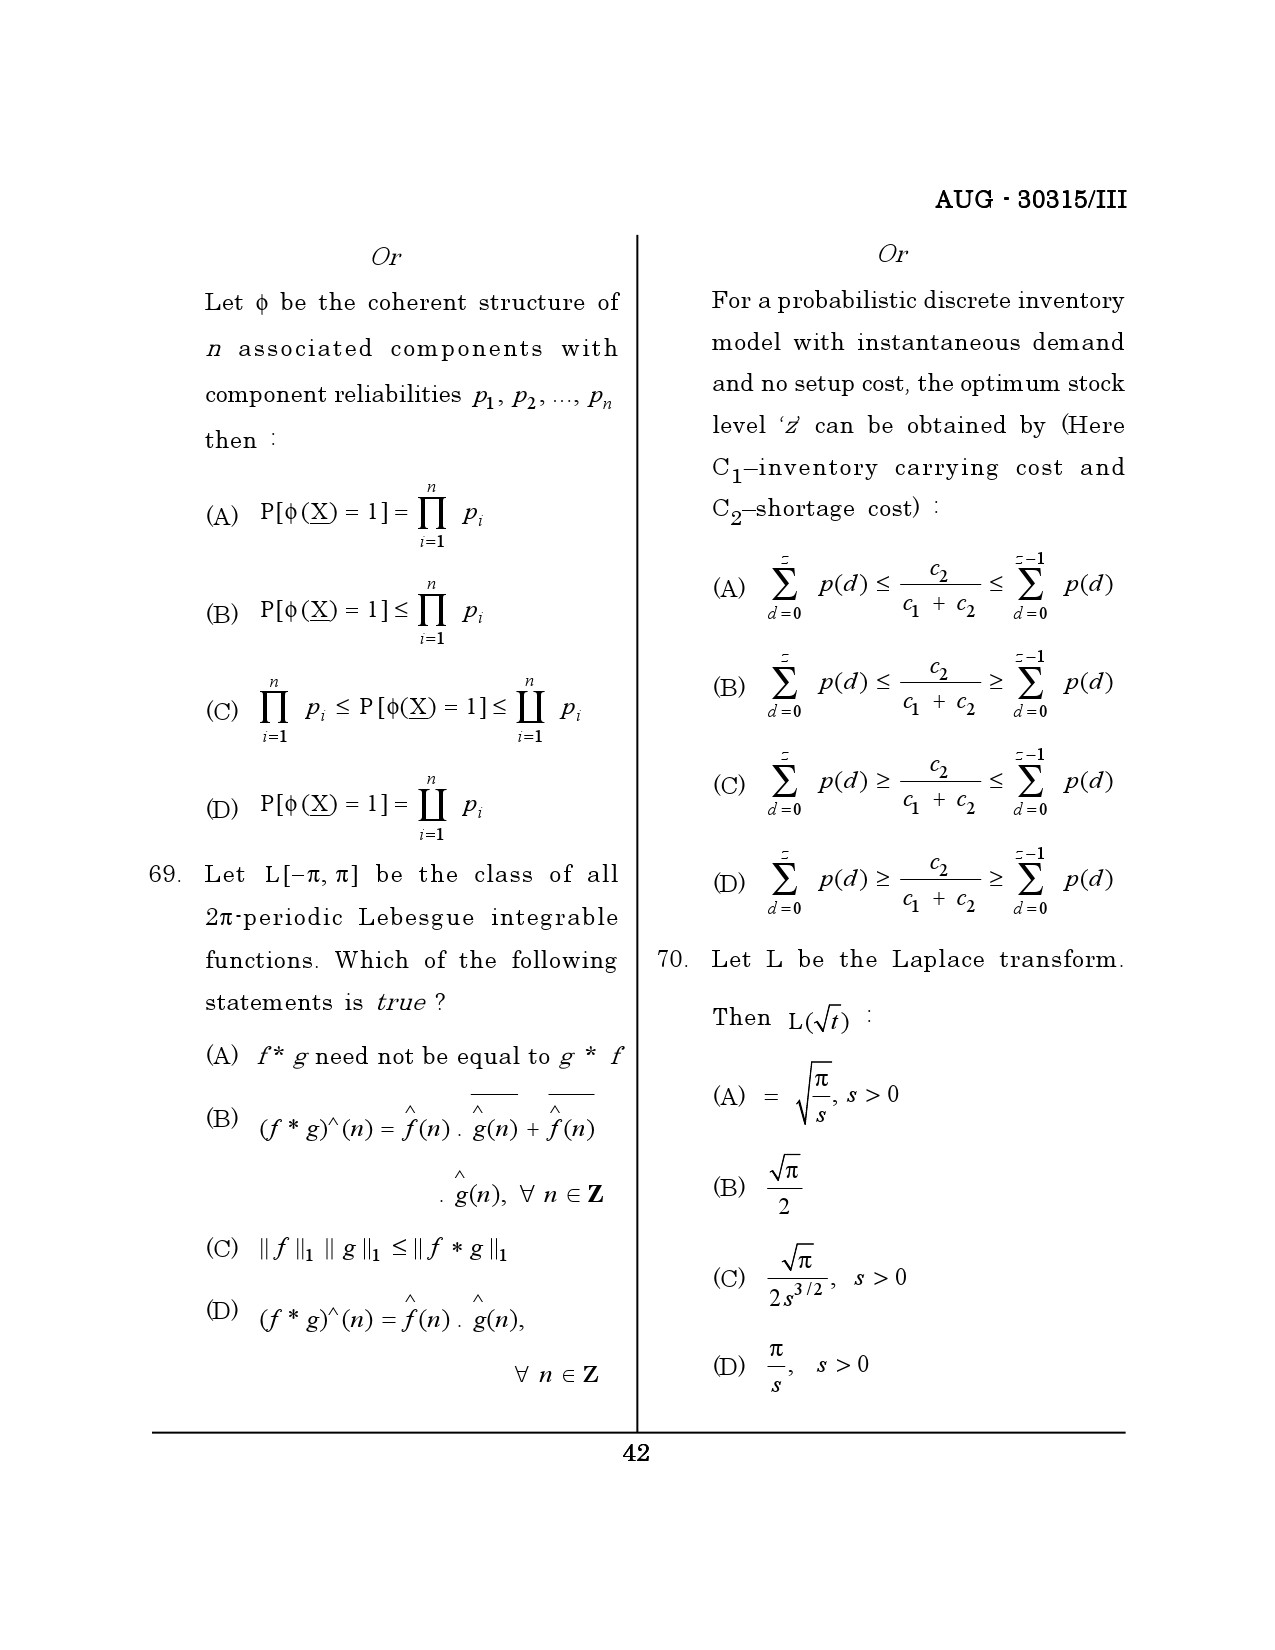 Maharashtra SET Mathematical Sciences Question Paper III August 2015 41